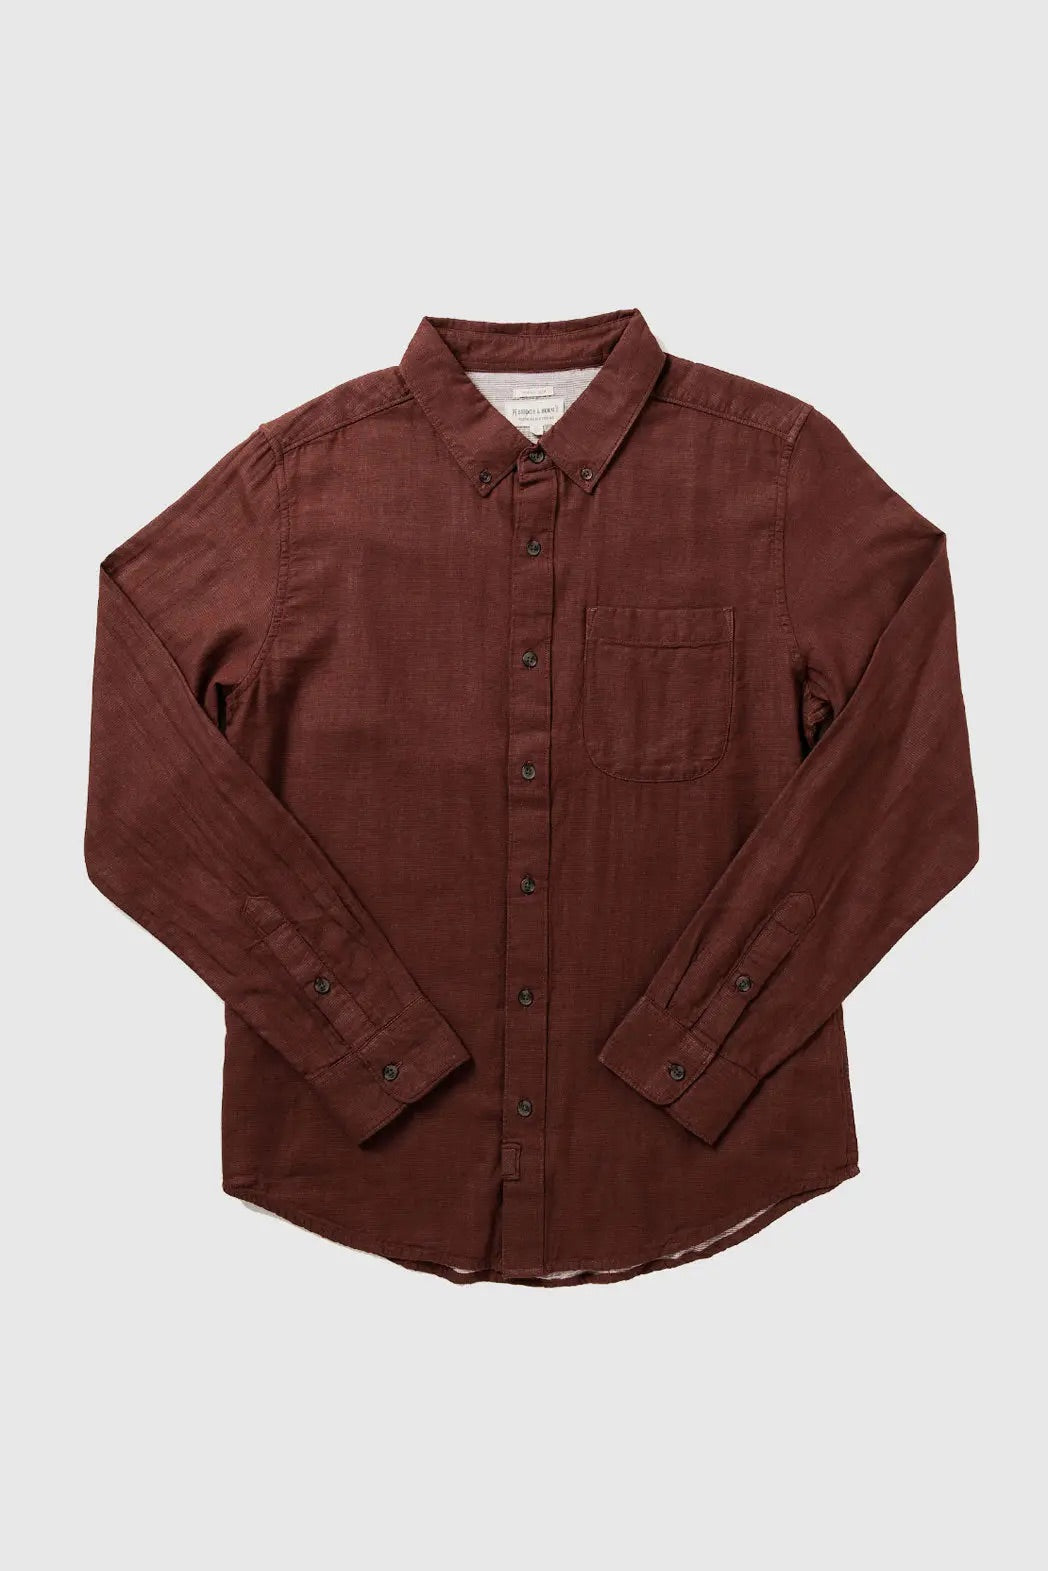 Sutton Burgundy Doublecloth Shirt